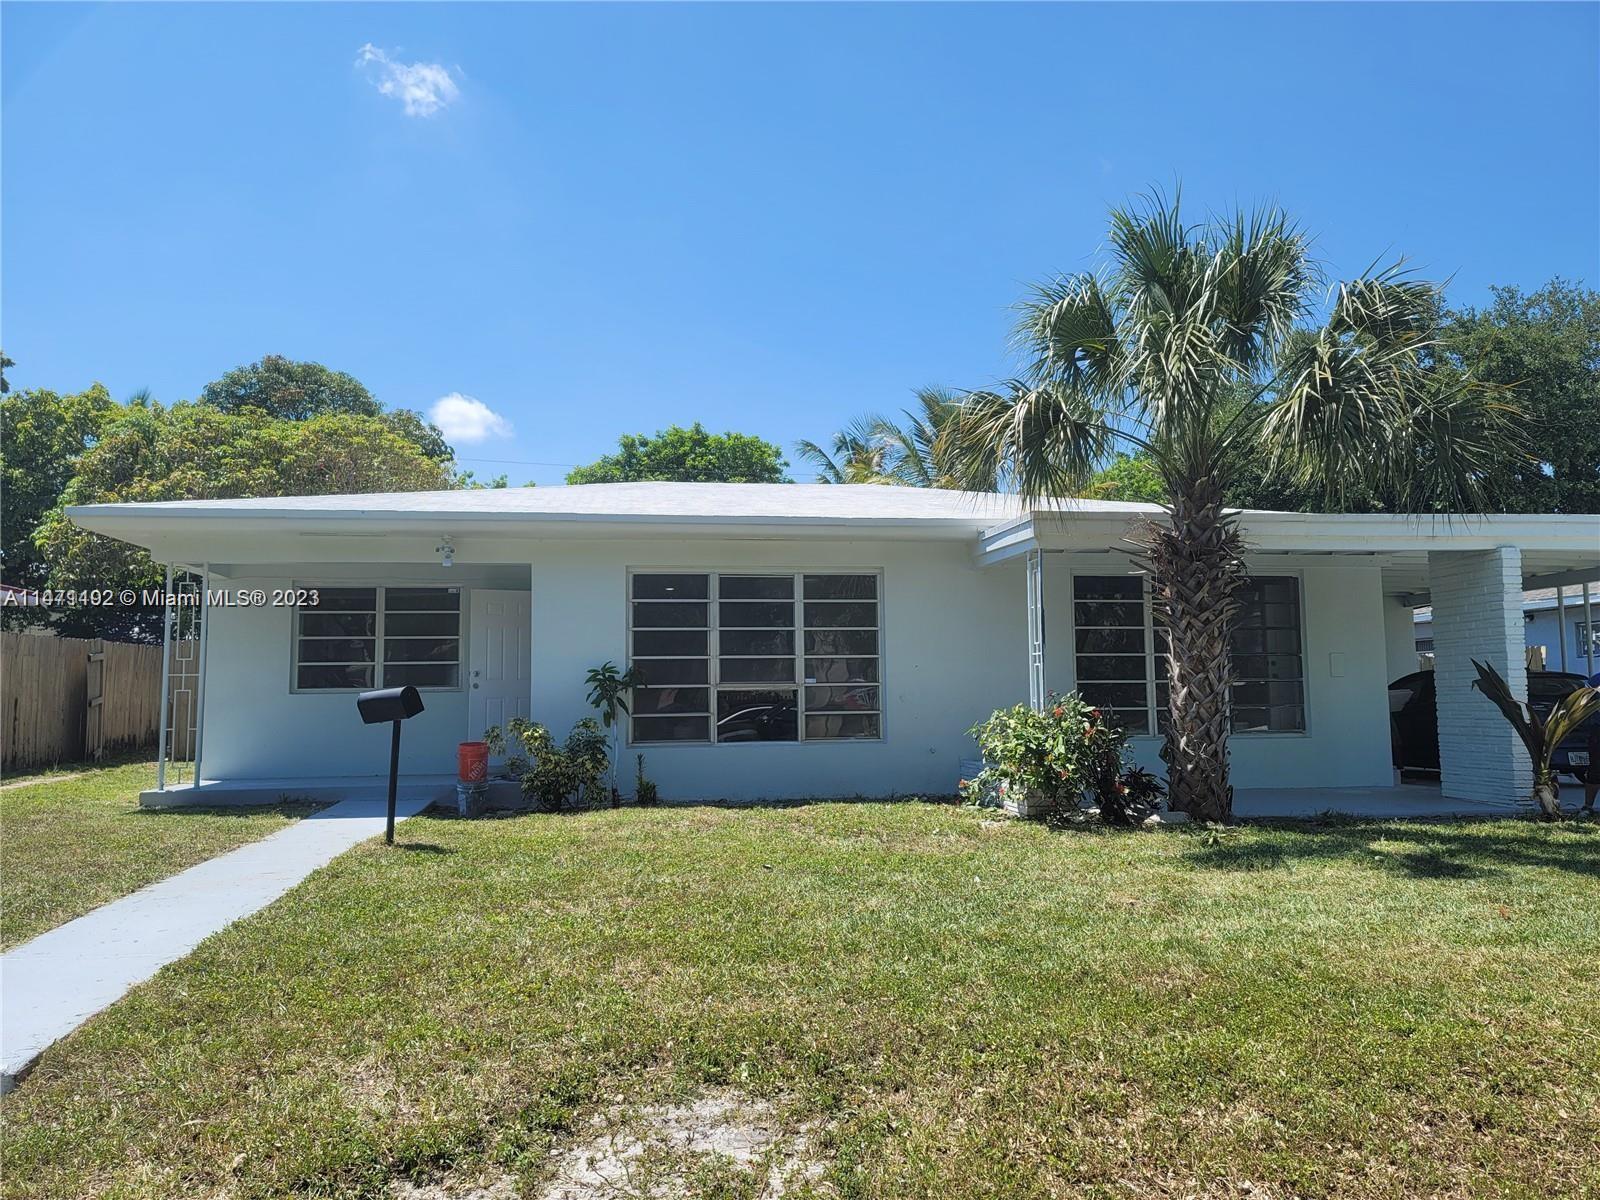 Rental Property at 16900 Ne 23rd Ave, North Miami Beach, Miami-Dade County, Florida -  - $829,900 MO.